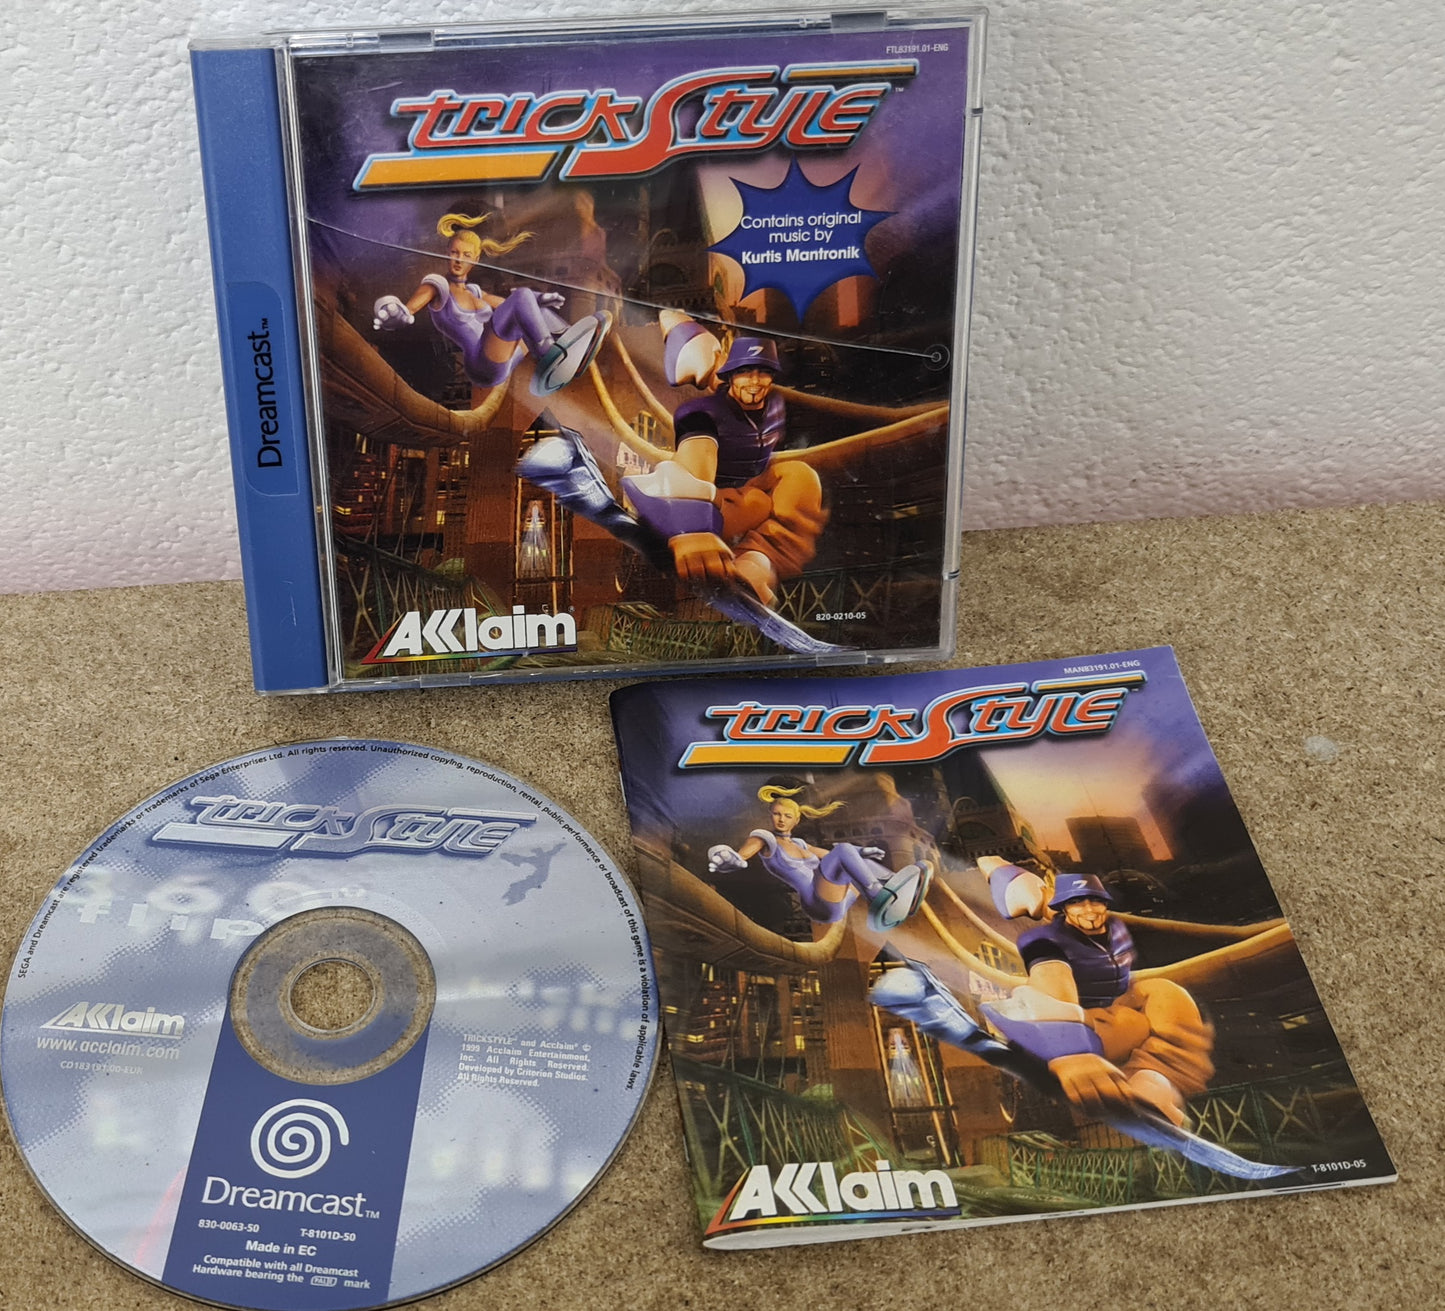 Trickstyle Sega Dreamcast Game